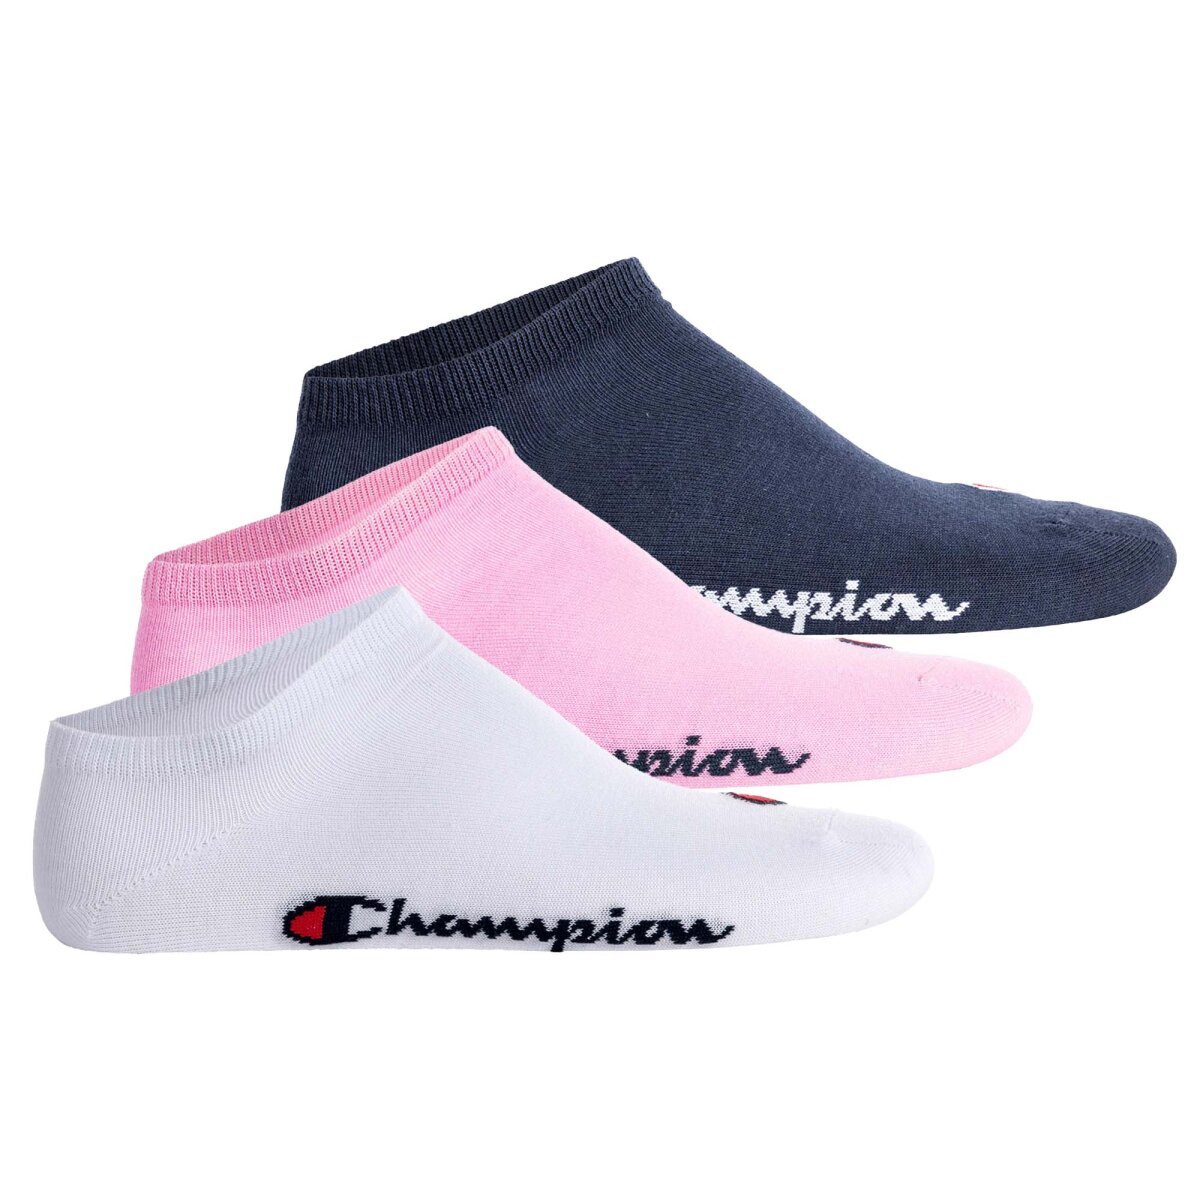 10,95 Basic, Champion - Paar 3 Socken € Sneaker